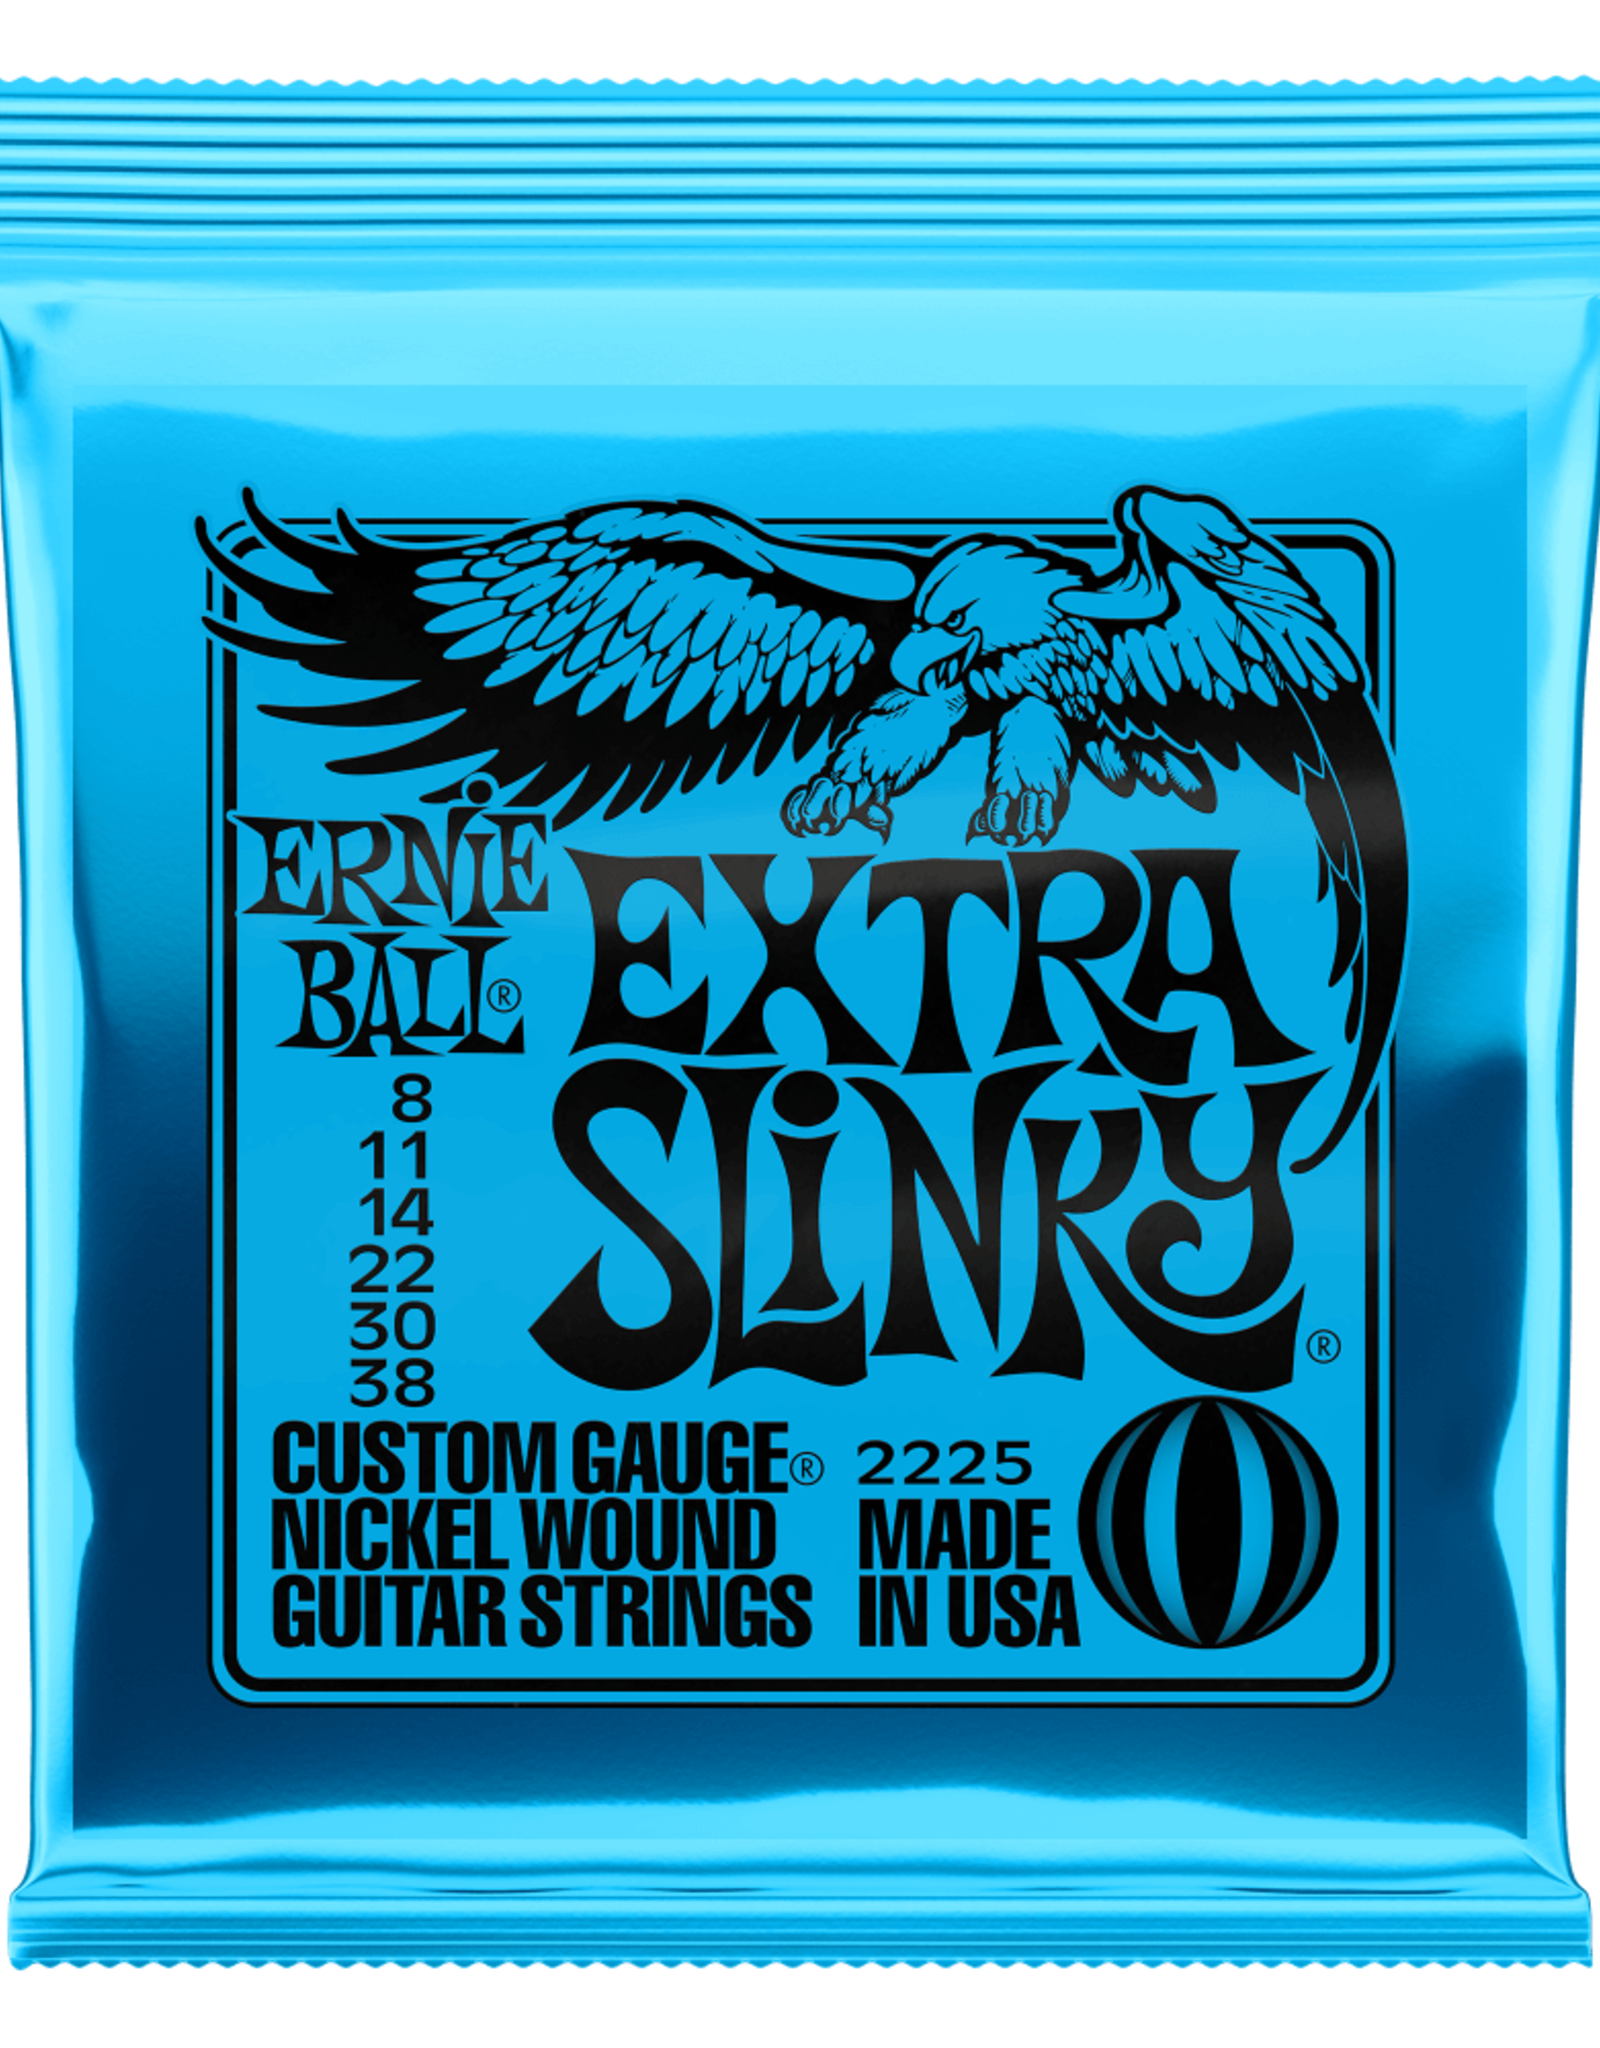 Ernie Ball Ernie Ball 8-38 Extra Slinky Nickel Wound Electric Guitar Strings